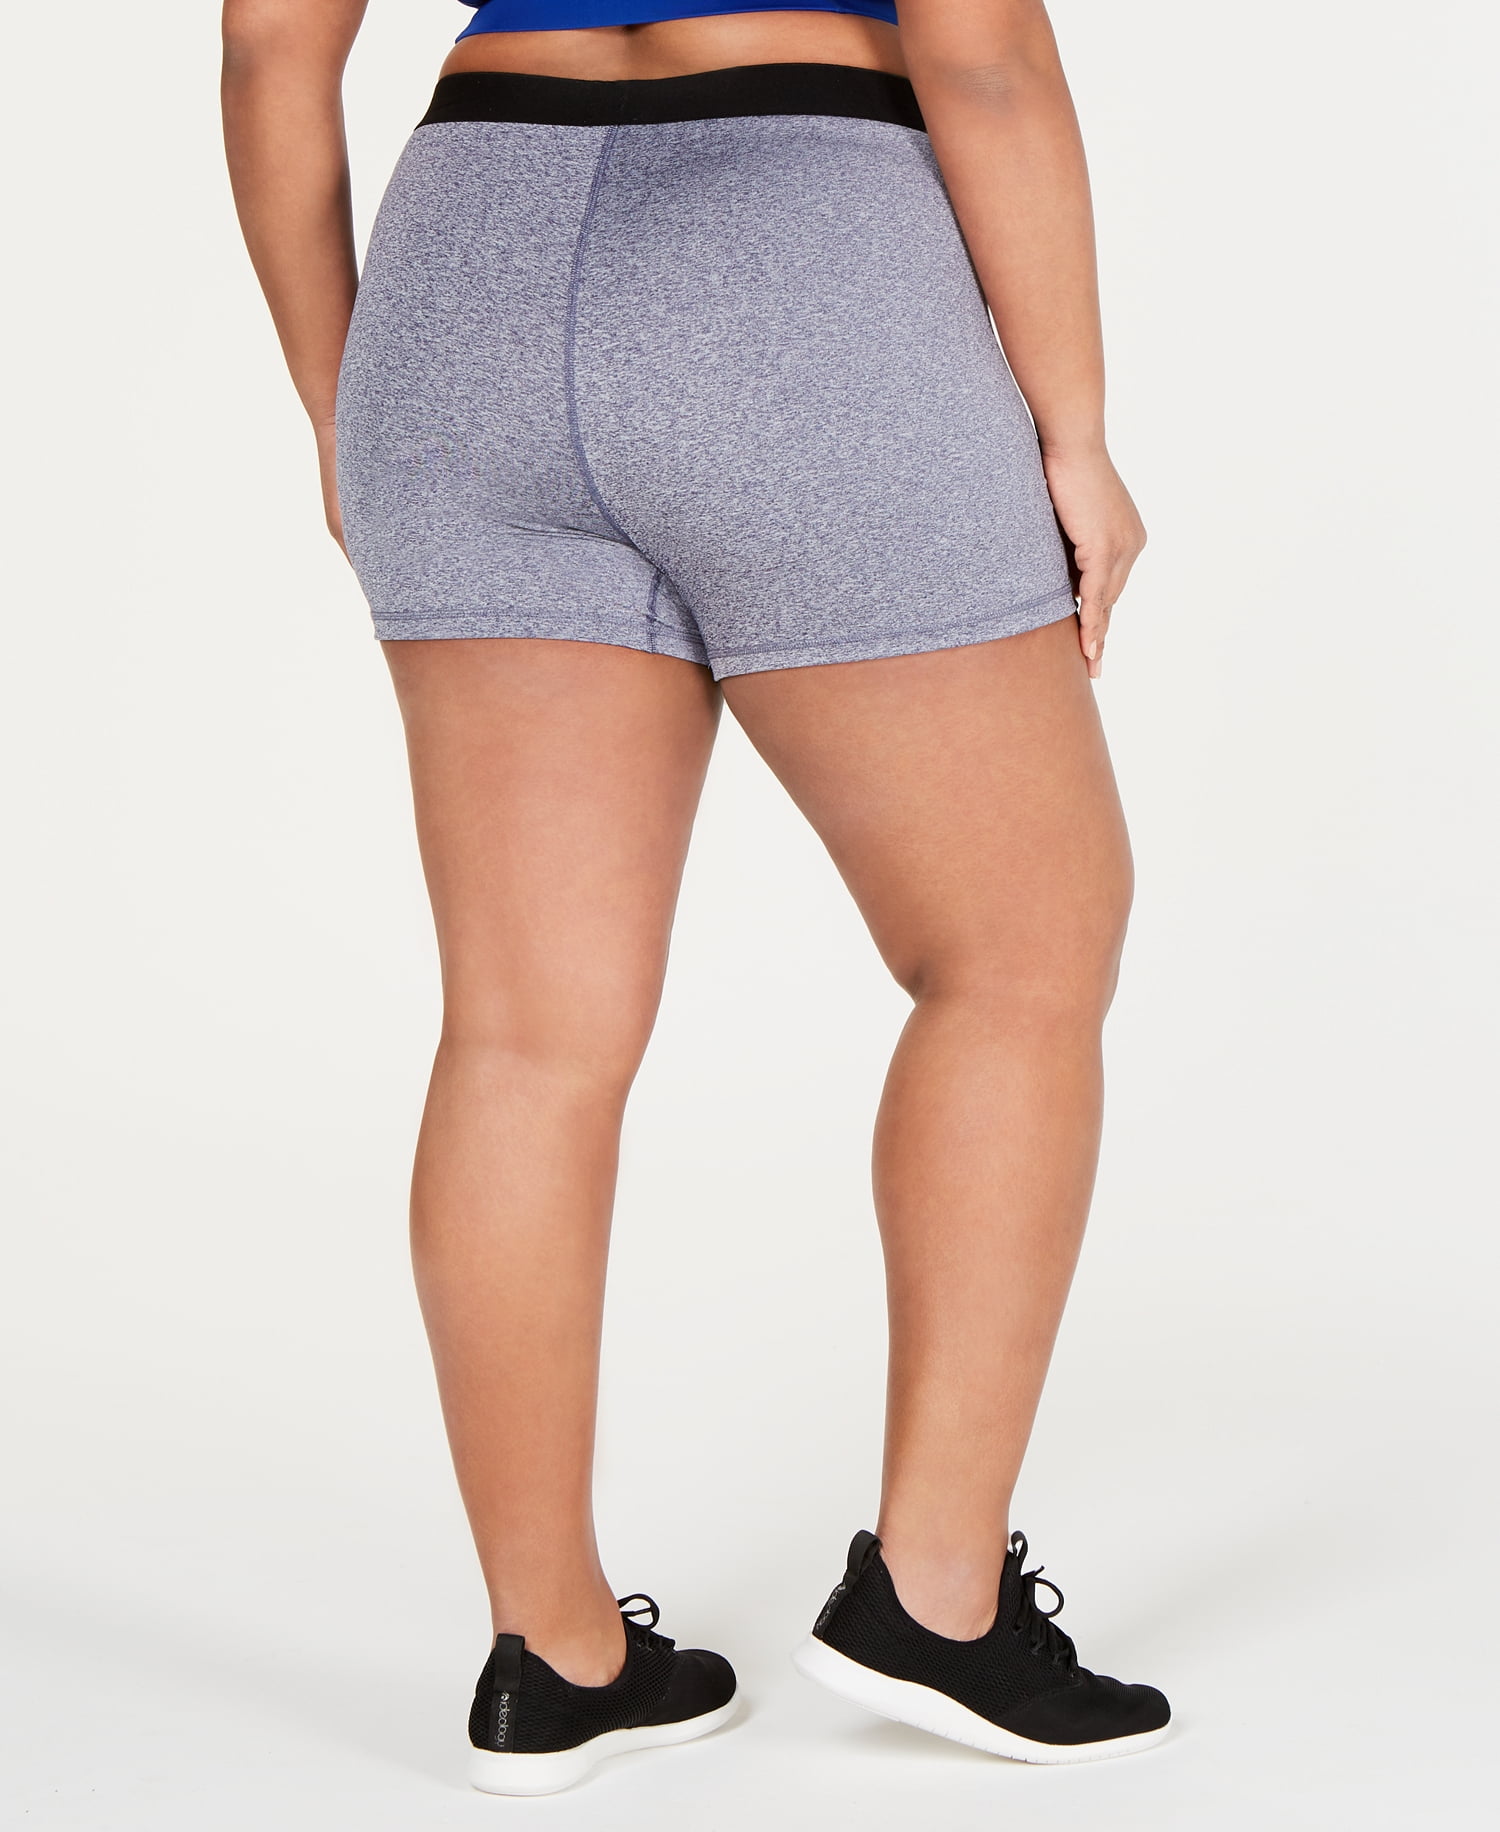 Soffe Womens Plus Size Dri-fit Training Shorts - Walmart.com